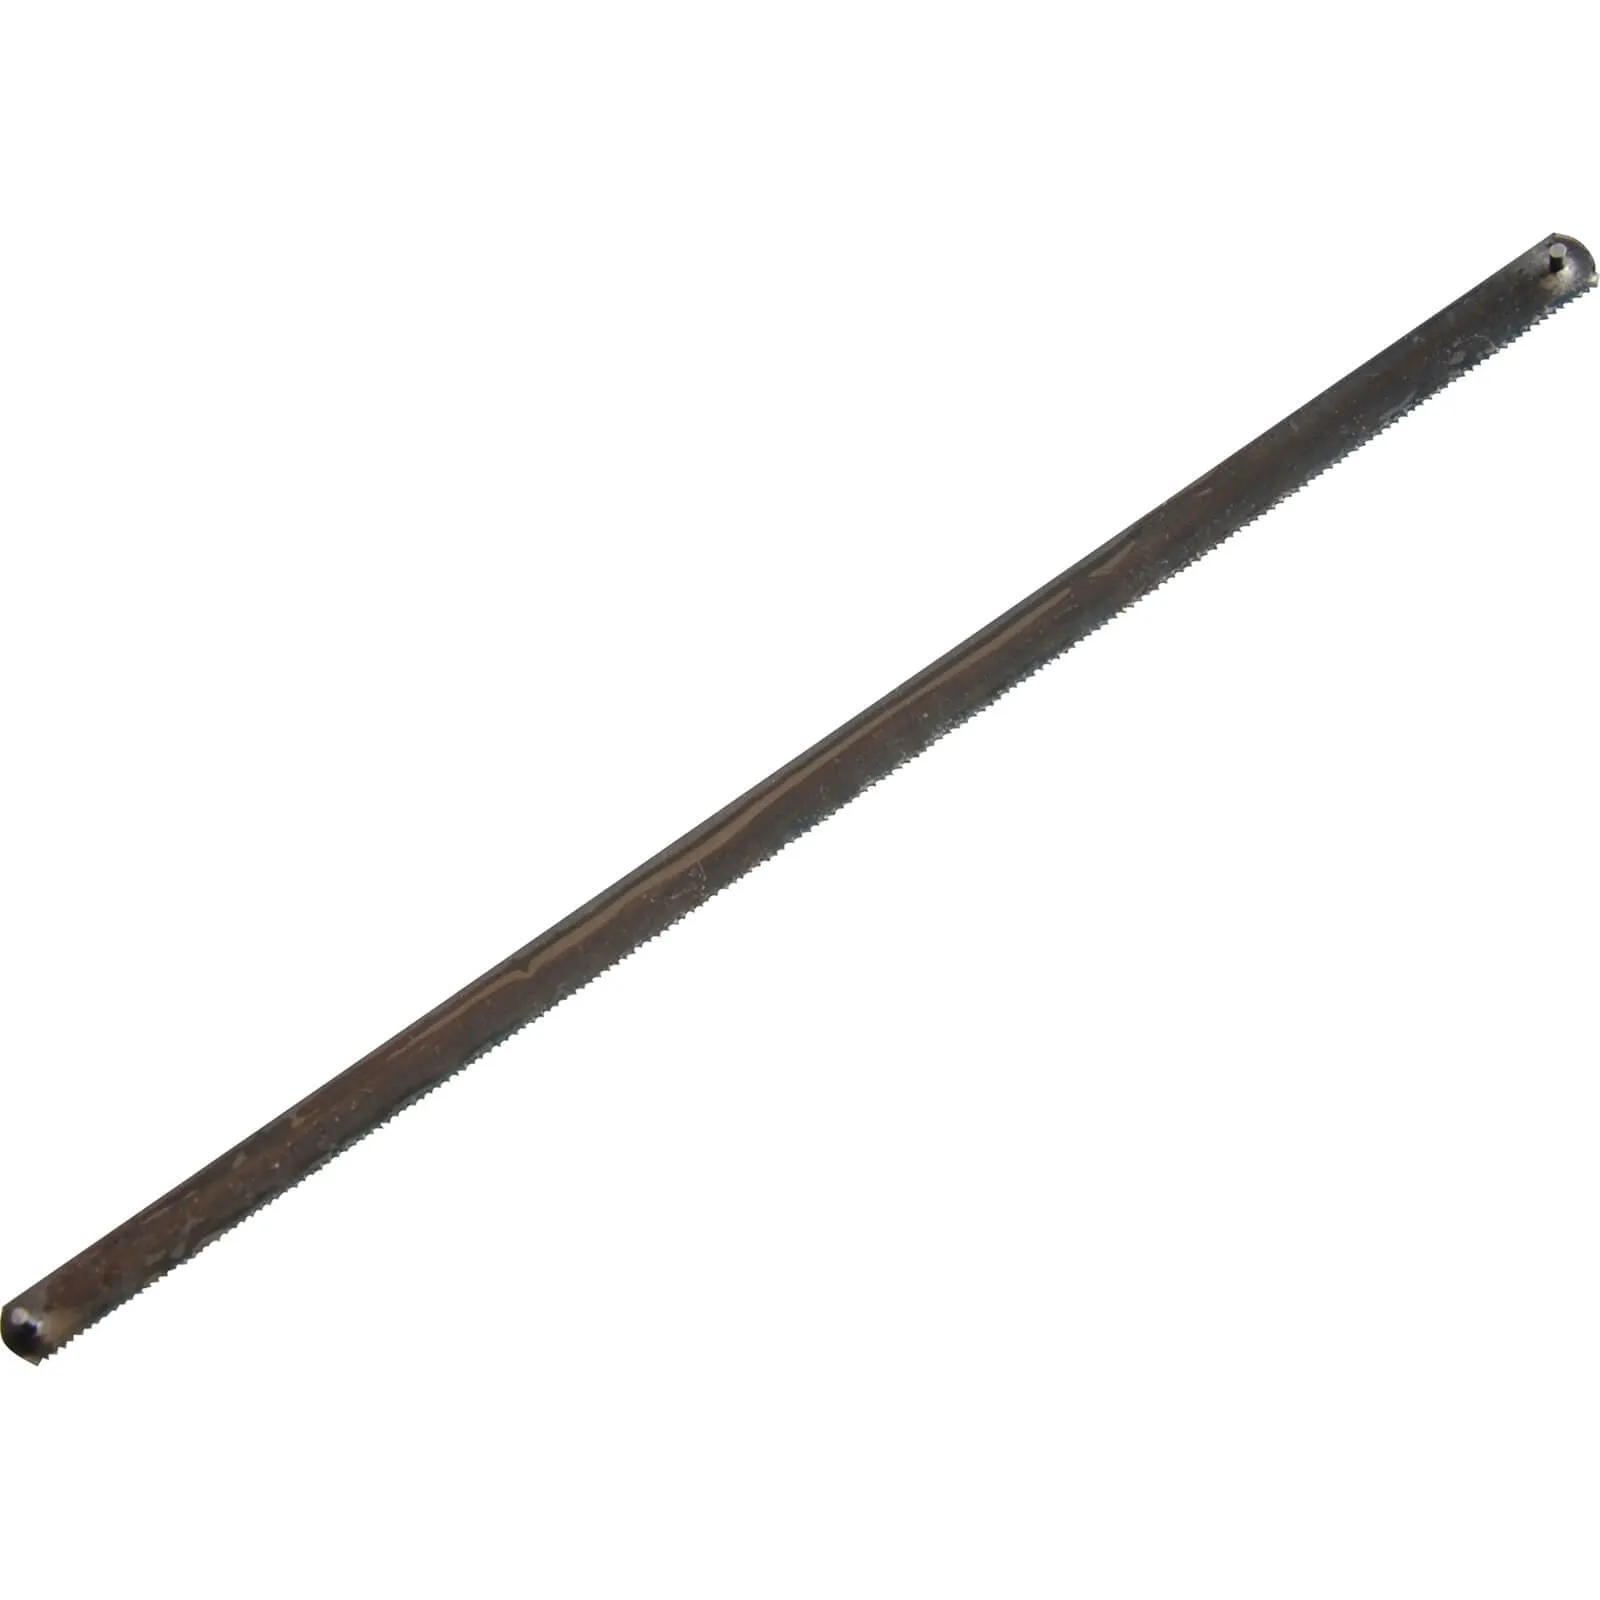 Monument Junior Hacksaw Blades - 6" / 150mm, 32tpi, Pack of 10